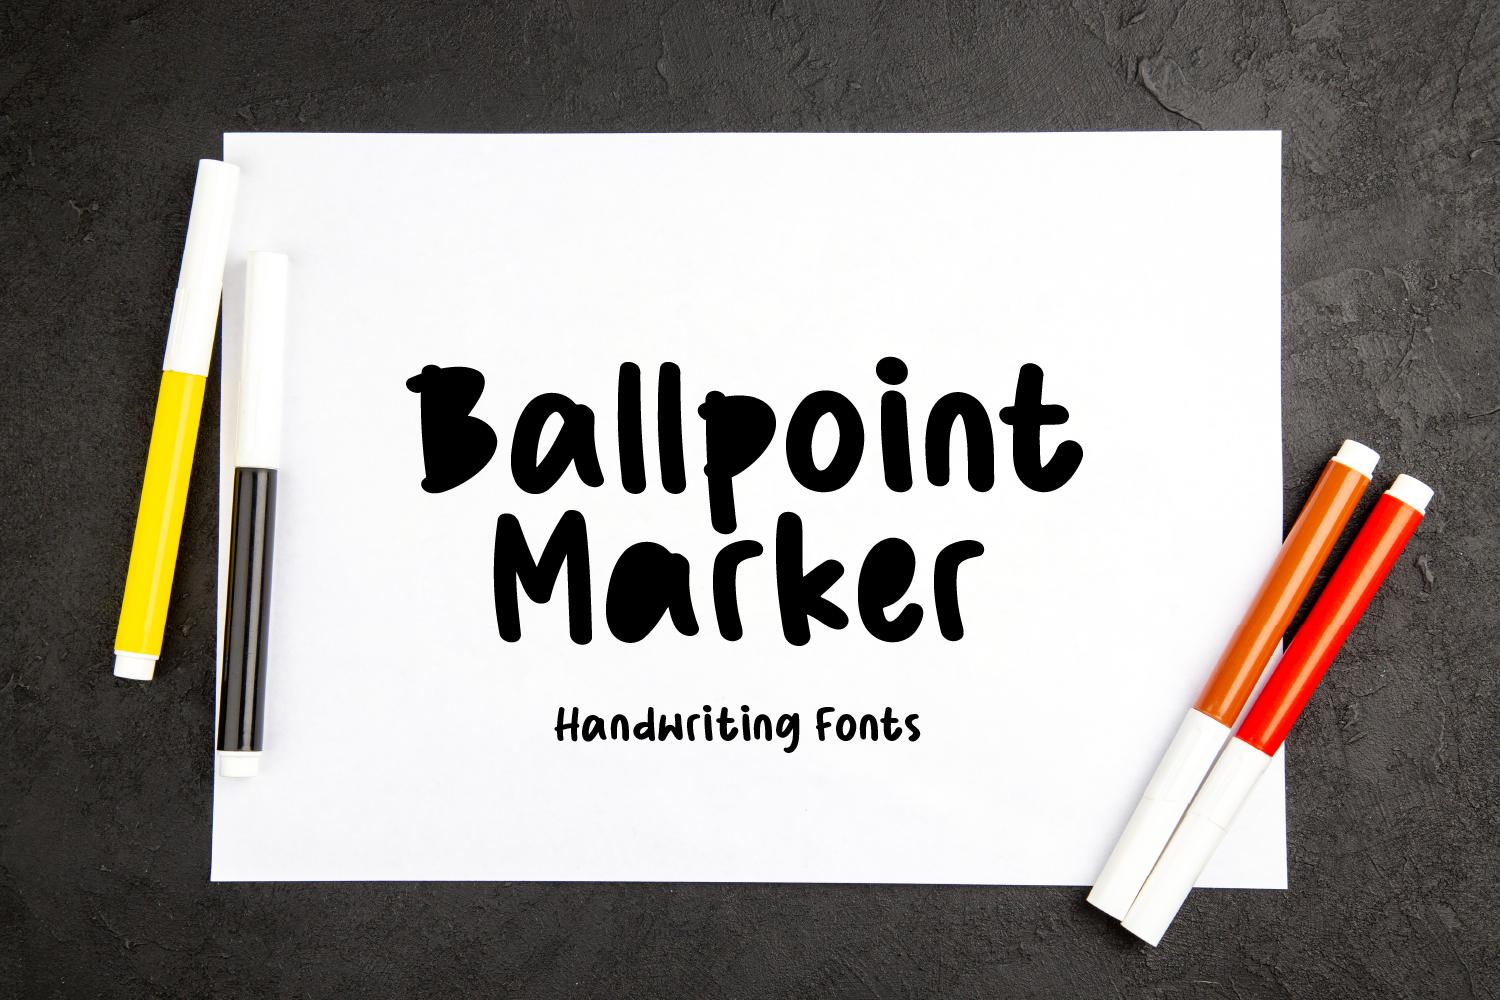 Ballpoint Marker Font